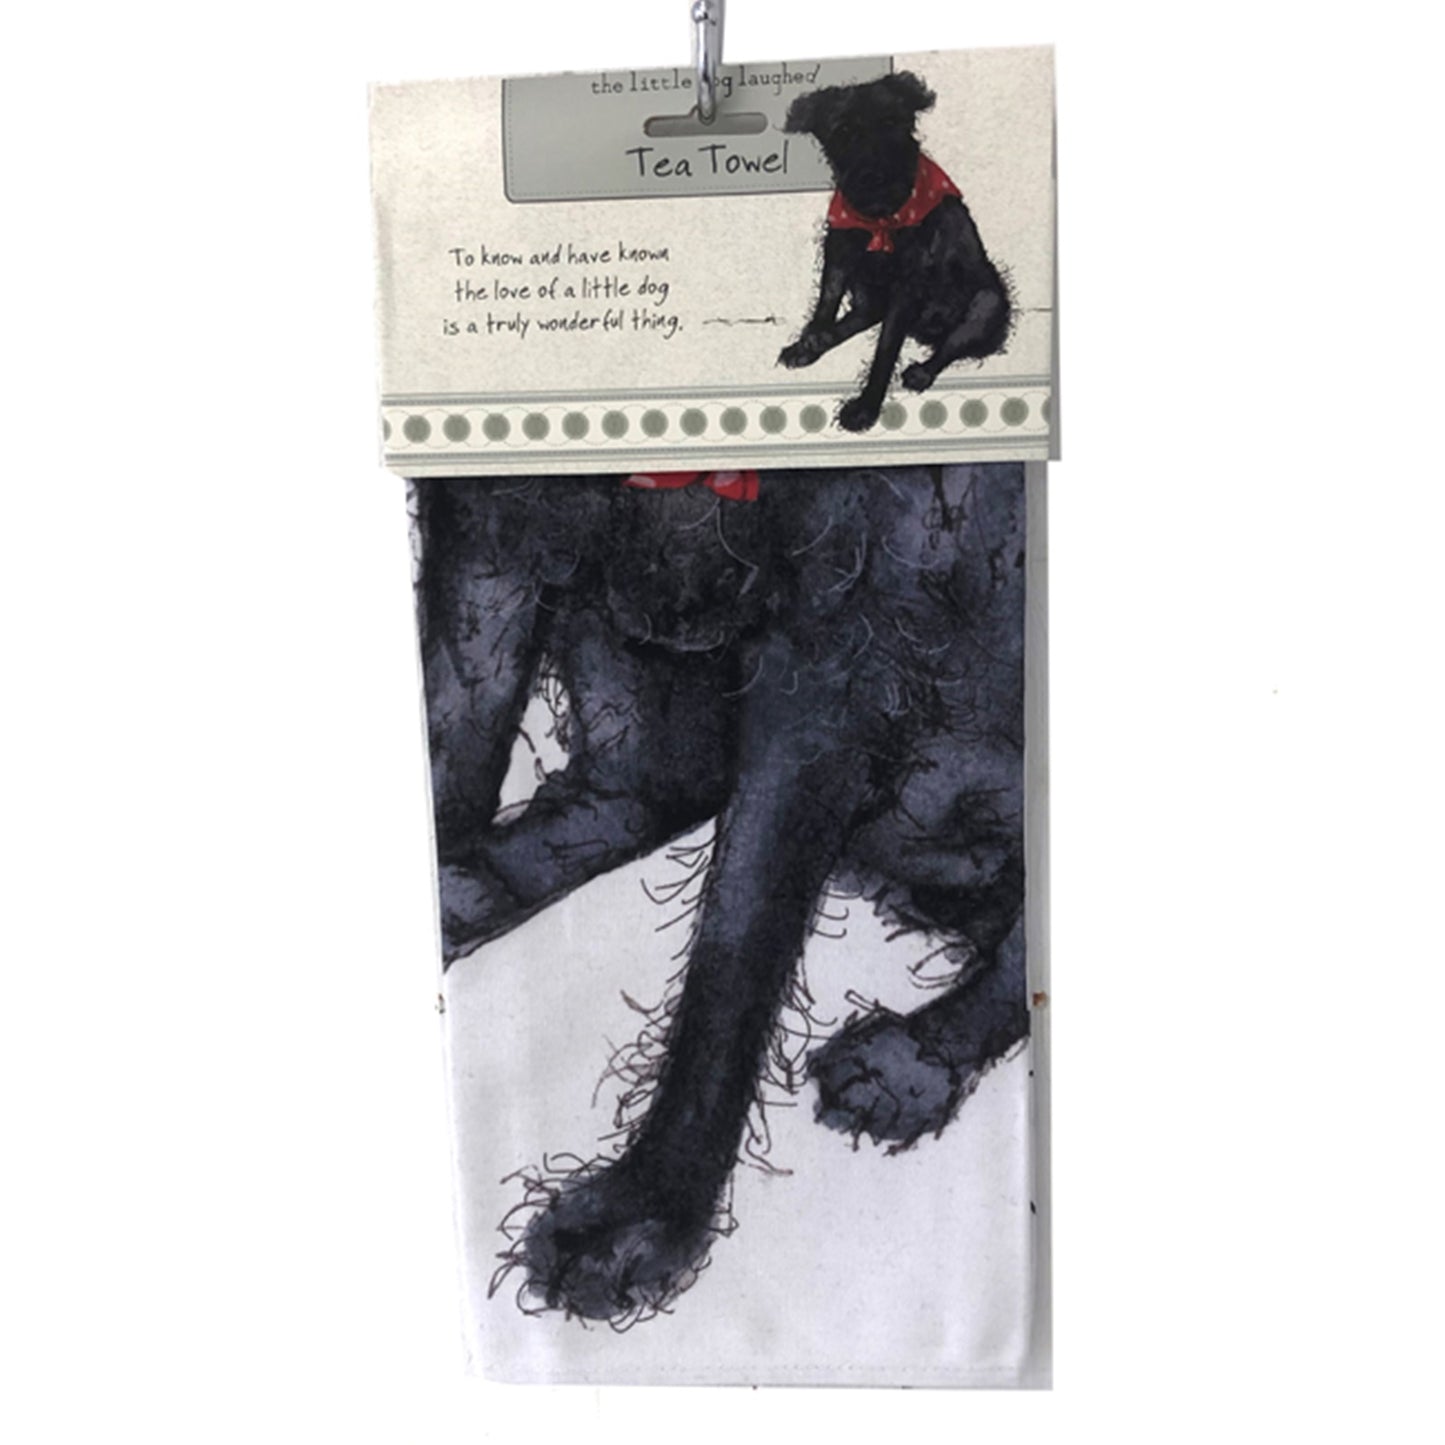 Patterdale Terrier Tea Towel - Little Dog